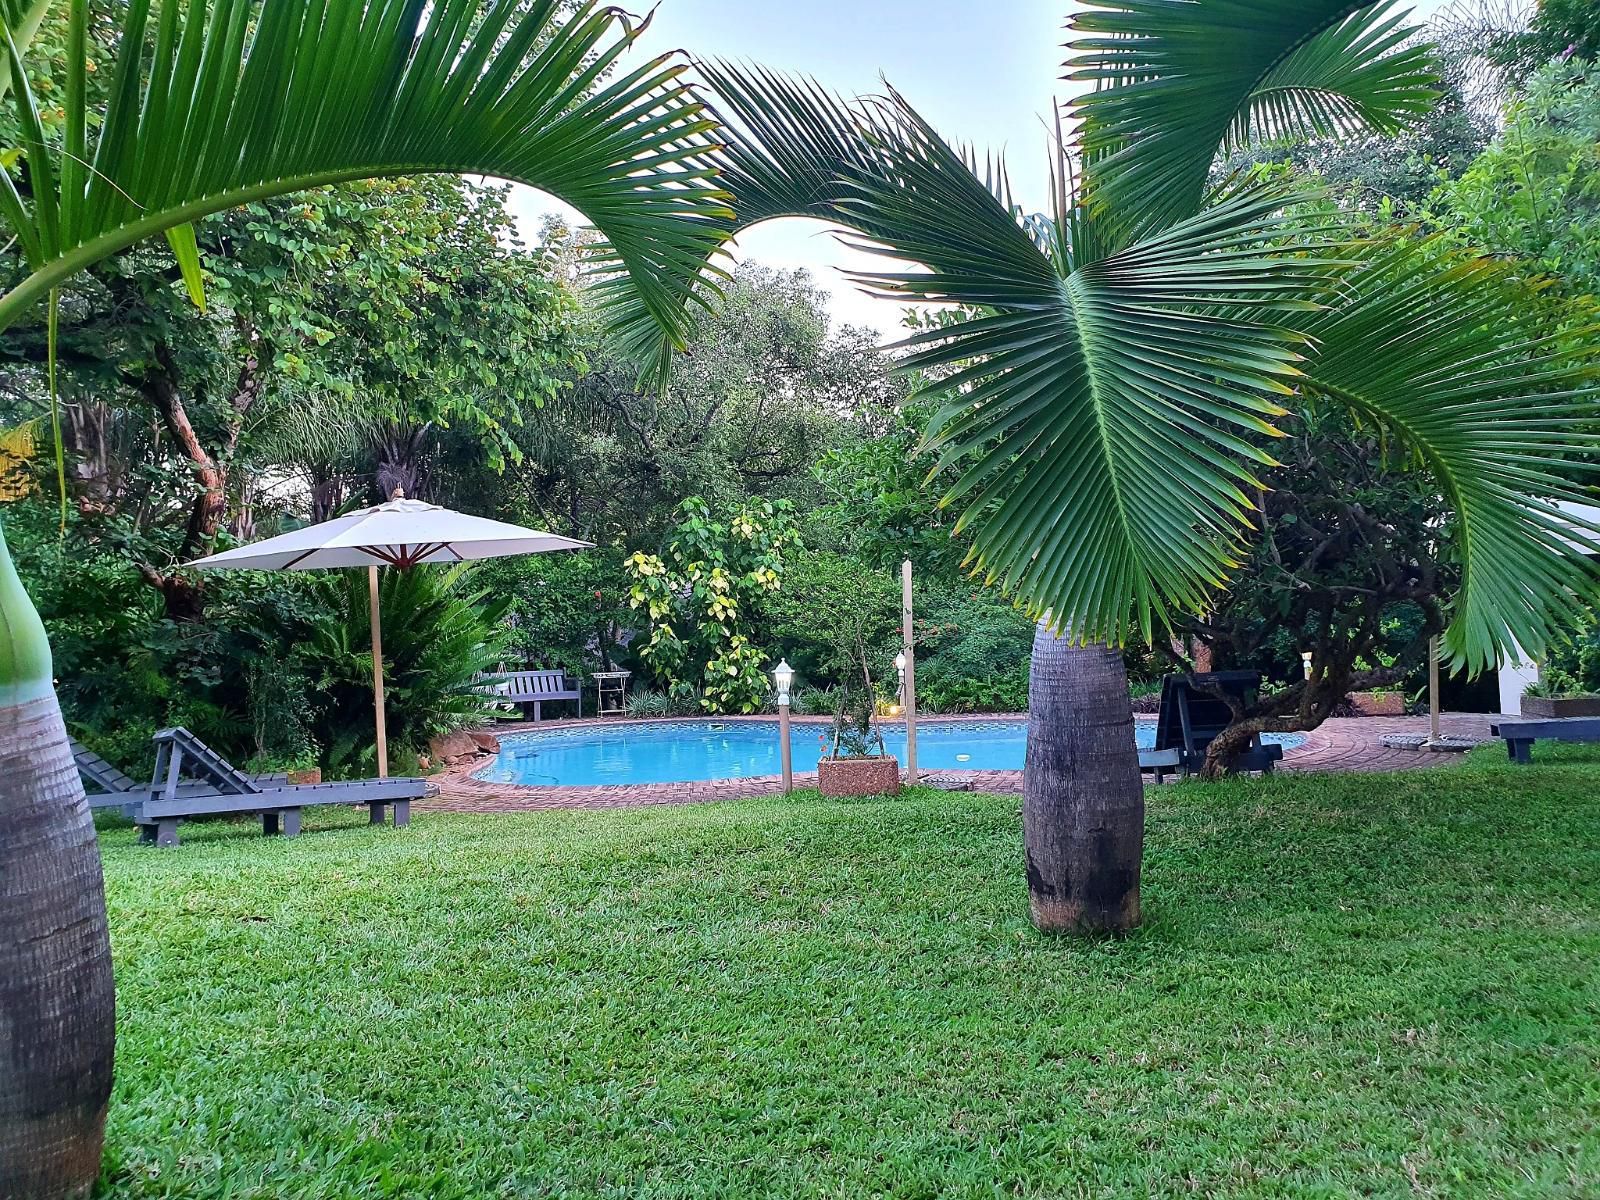 Shingalana Guest House Hazyview Mpumalanga South Africa Palm Tree, Plant, Nature, Wood, Swimming Pool